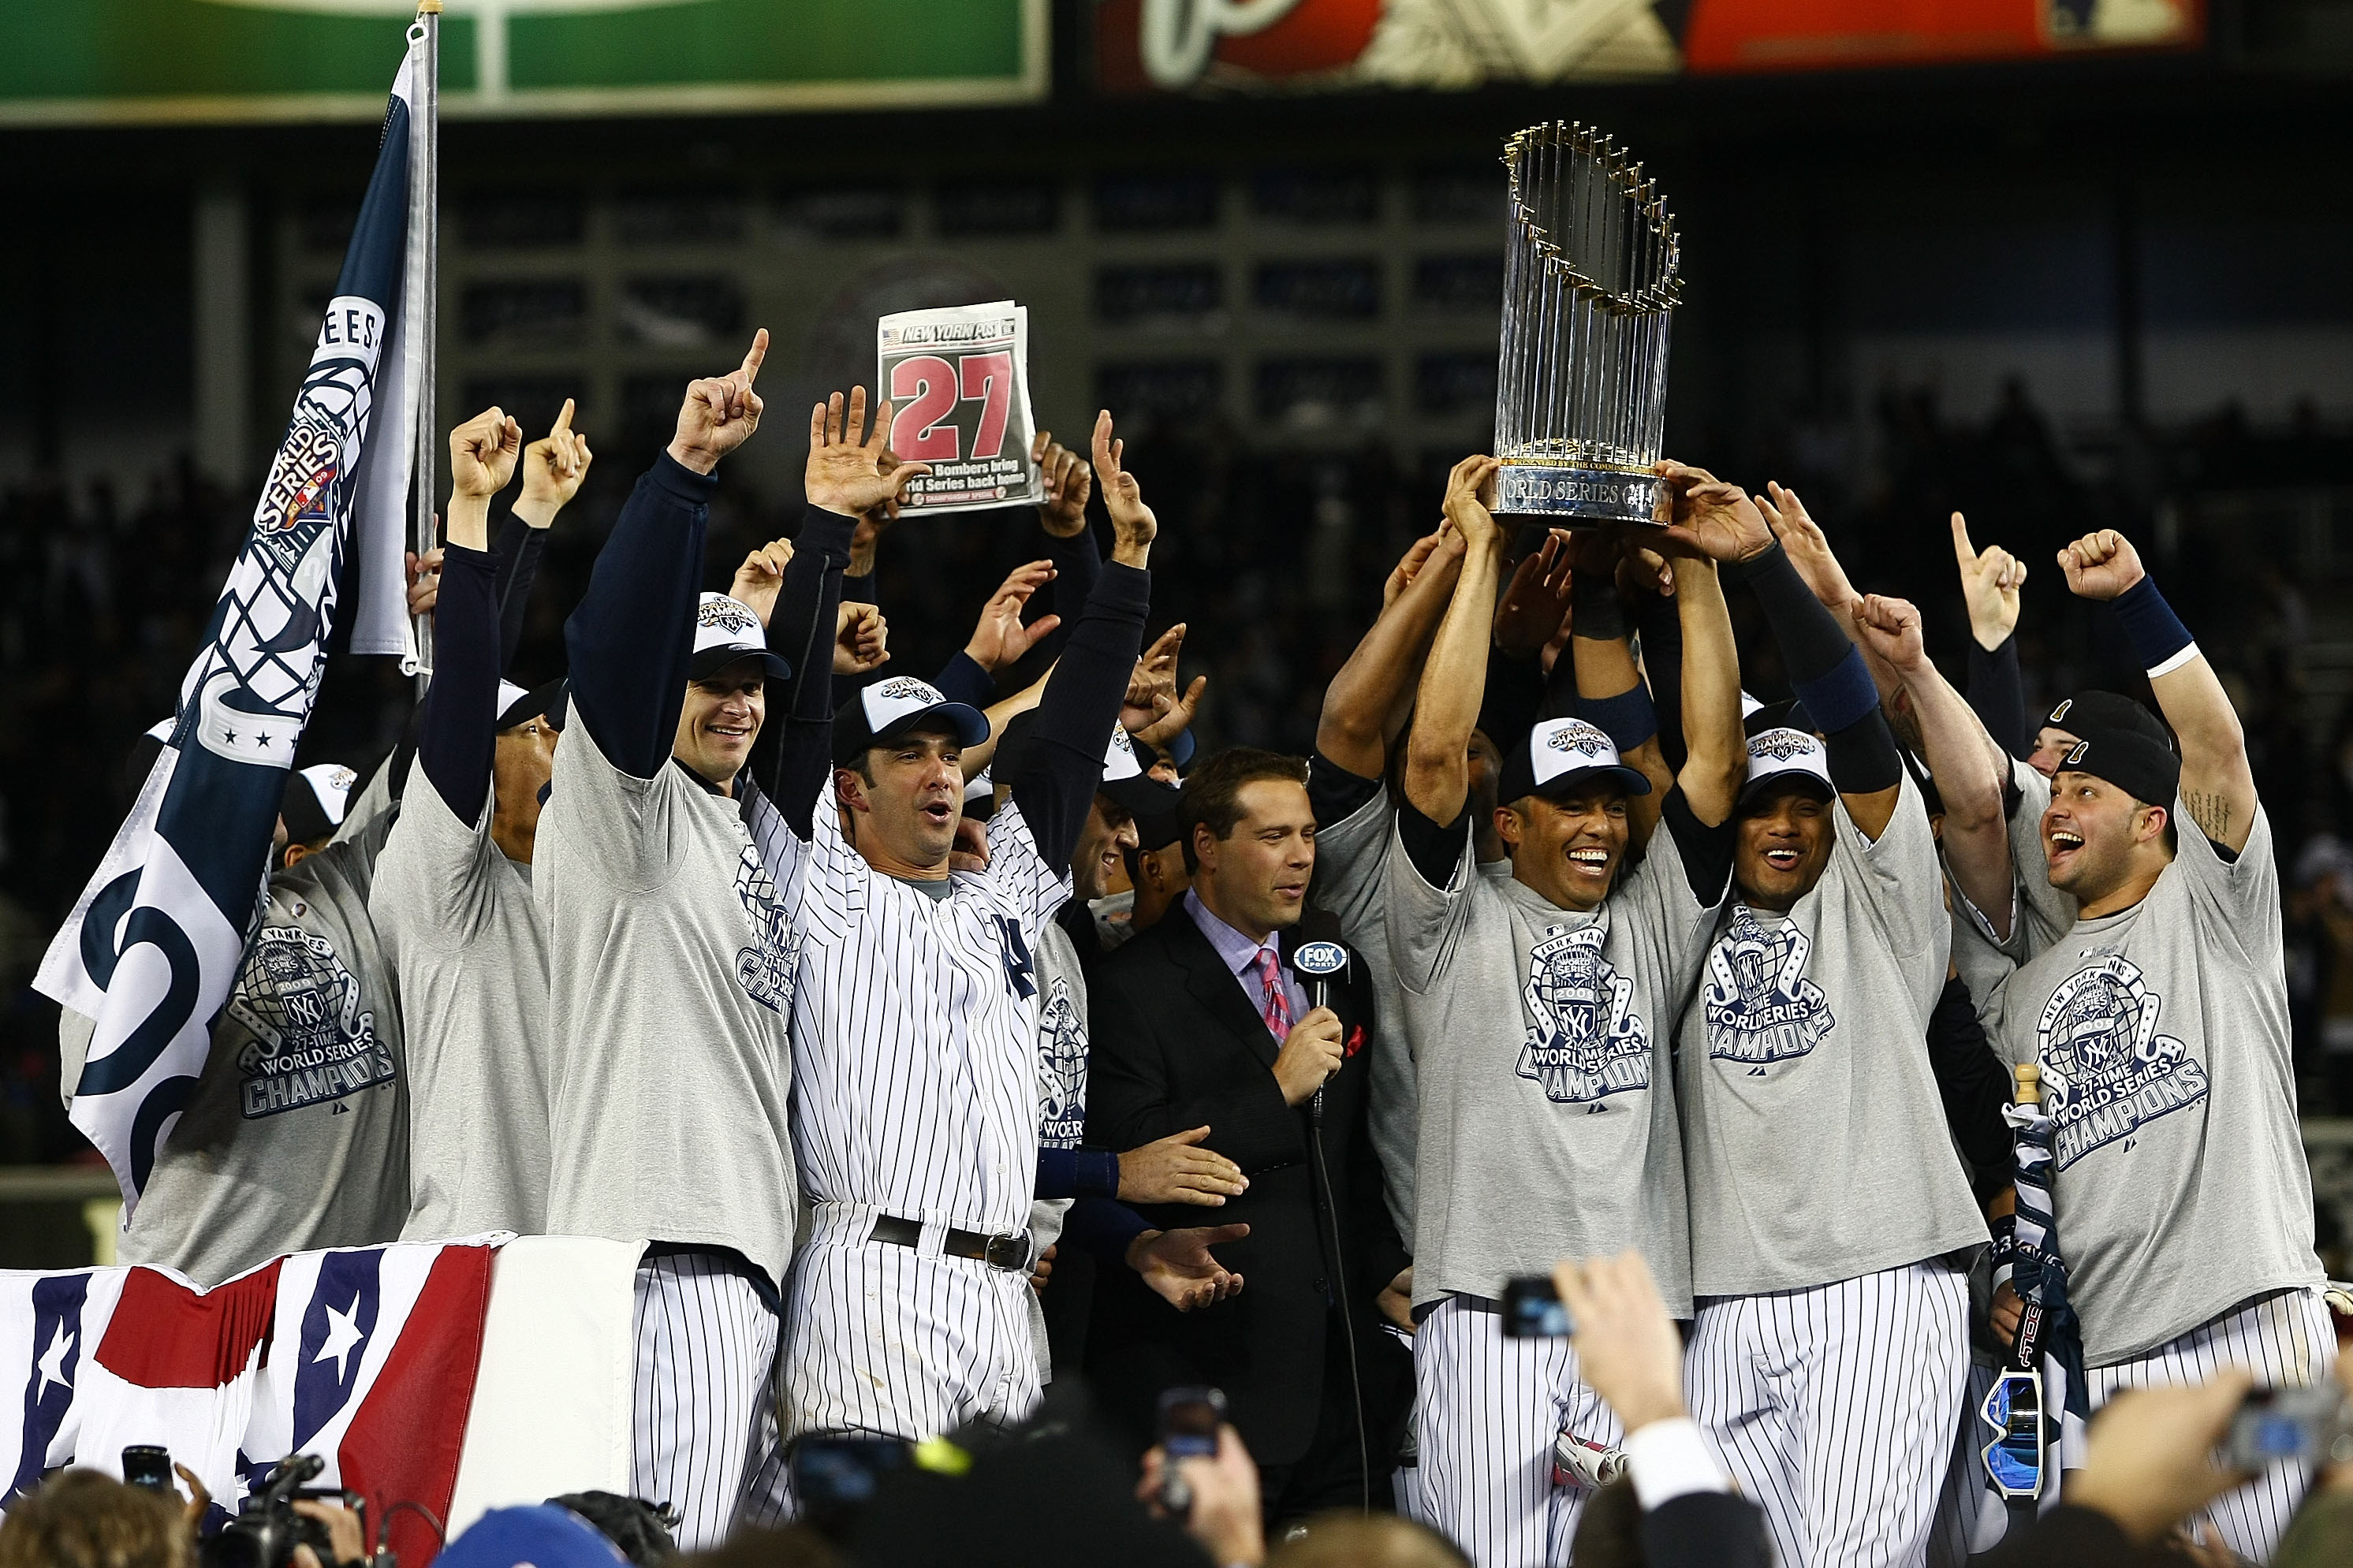 2009 World Series 